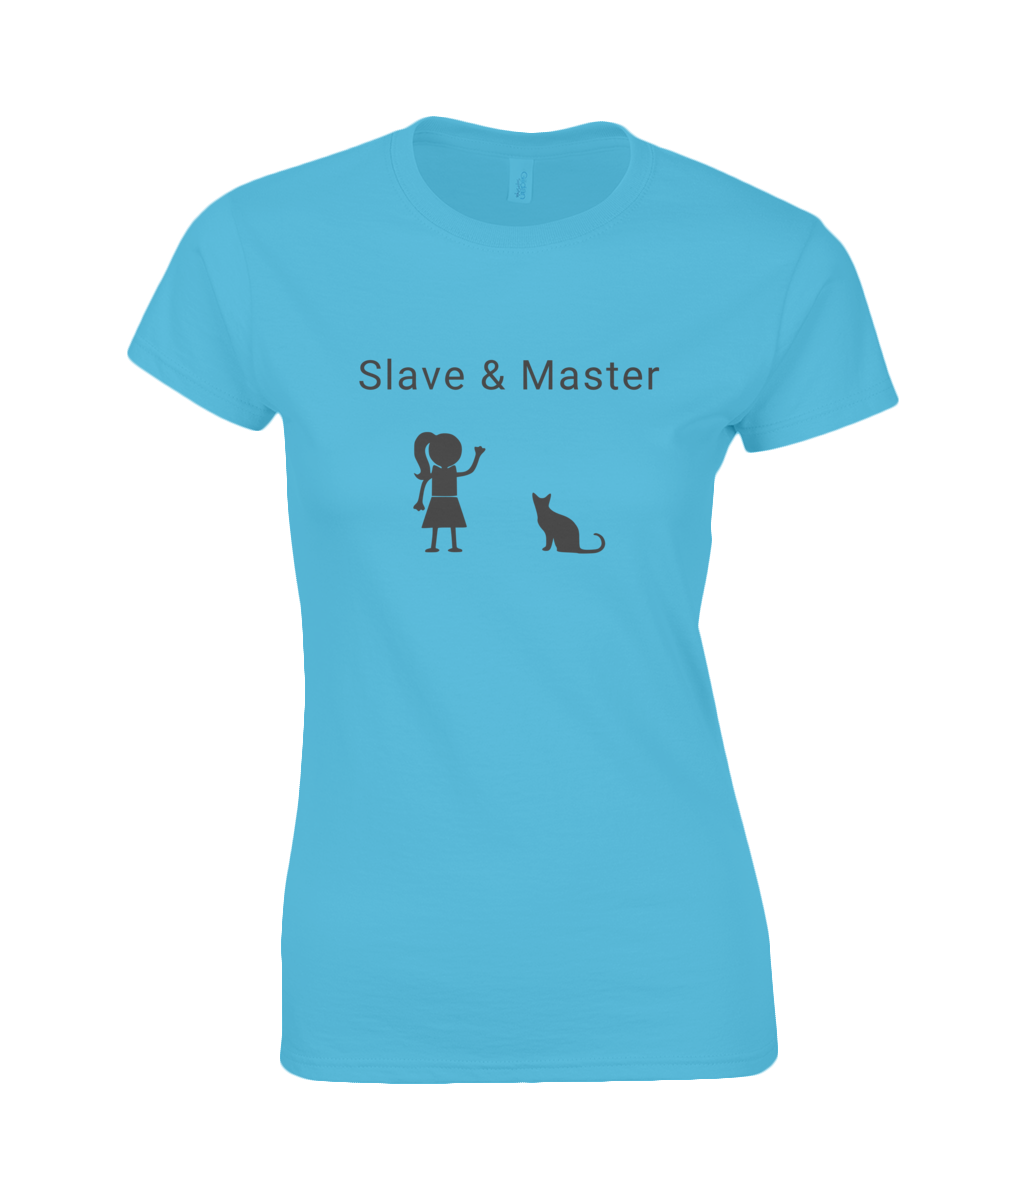 'Slave & Master' T-Shirt - squishbeans